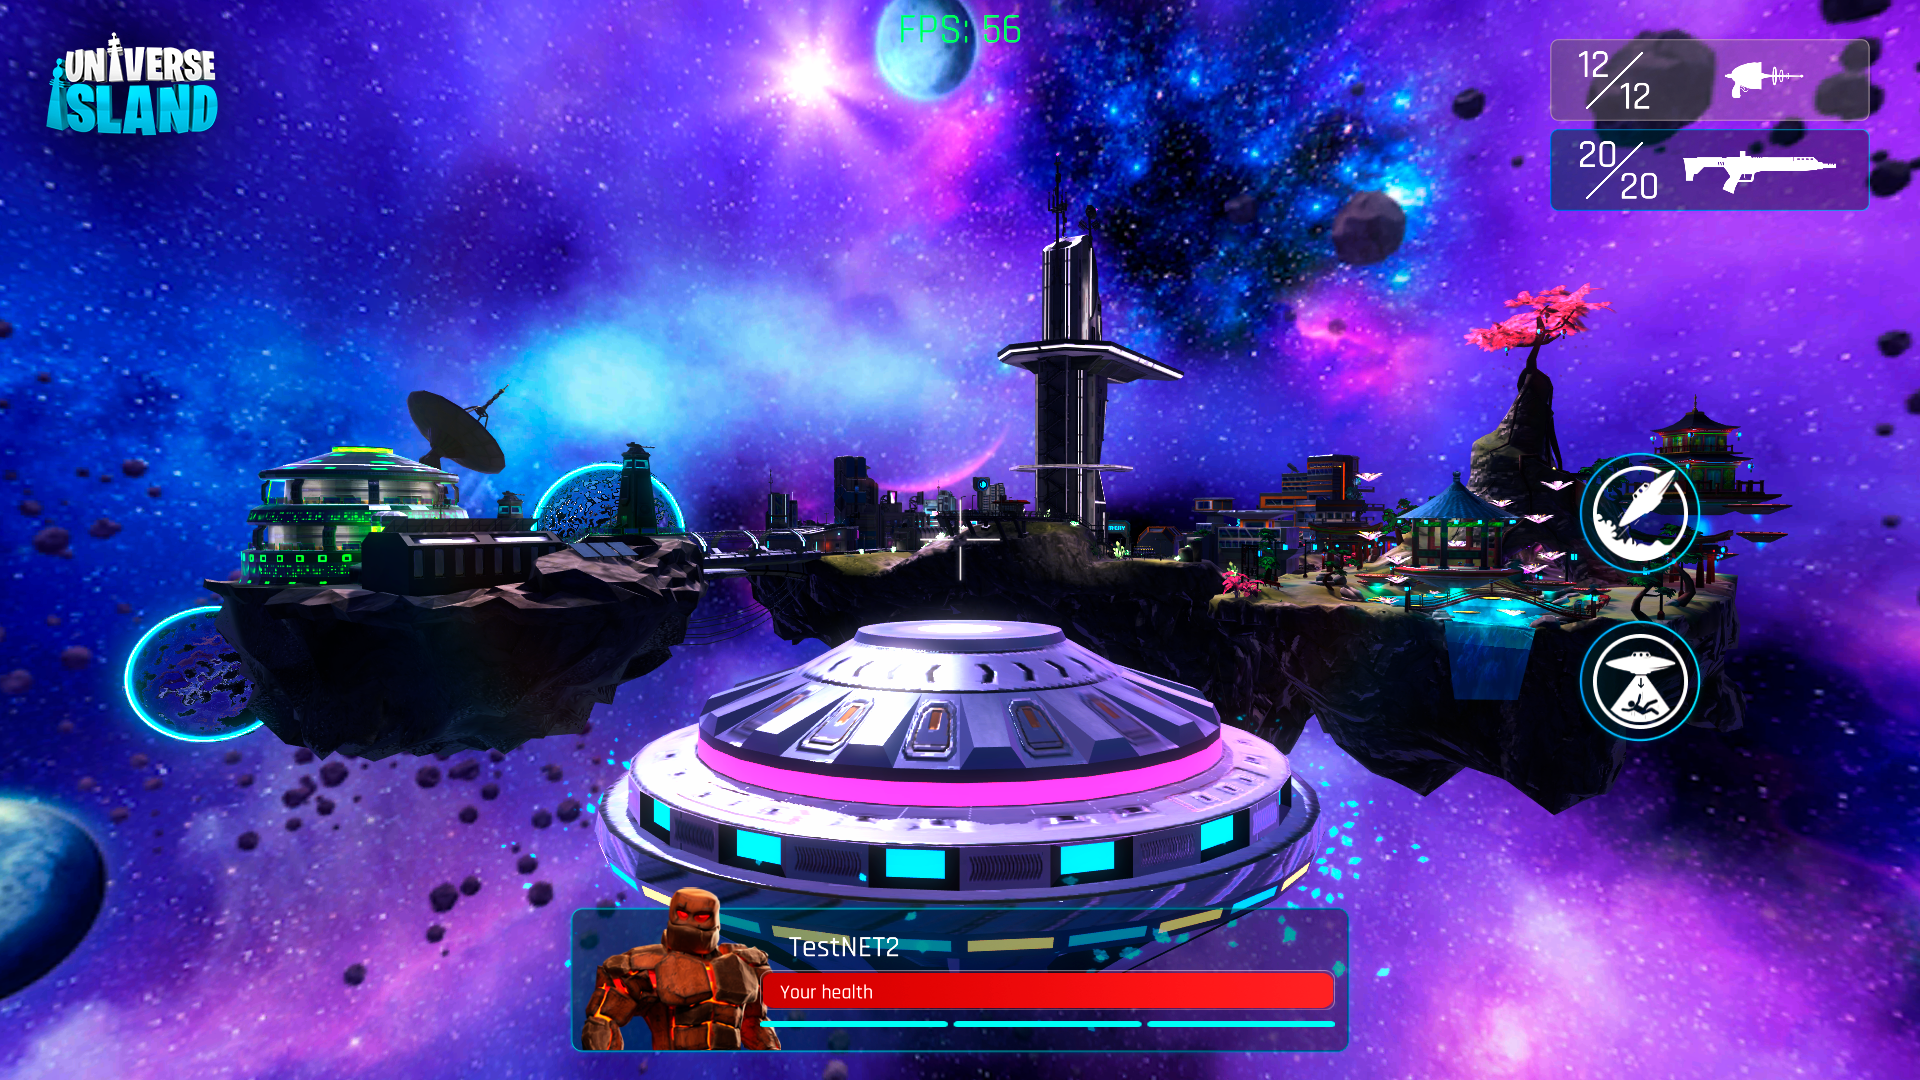 Universo Z Online Windows game - IndieDB